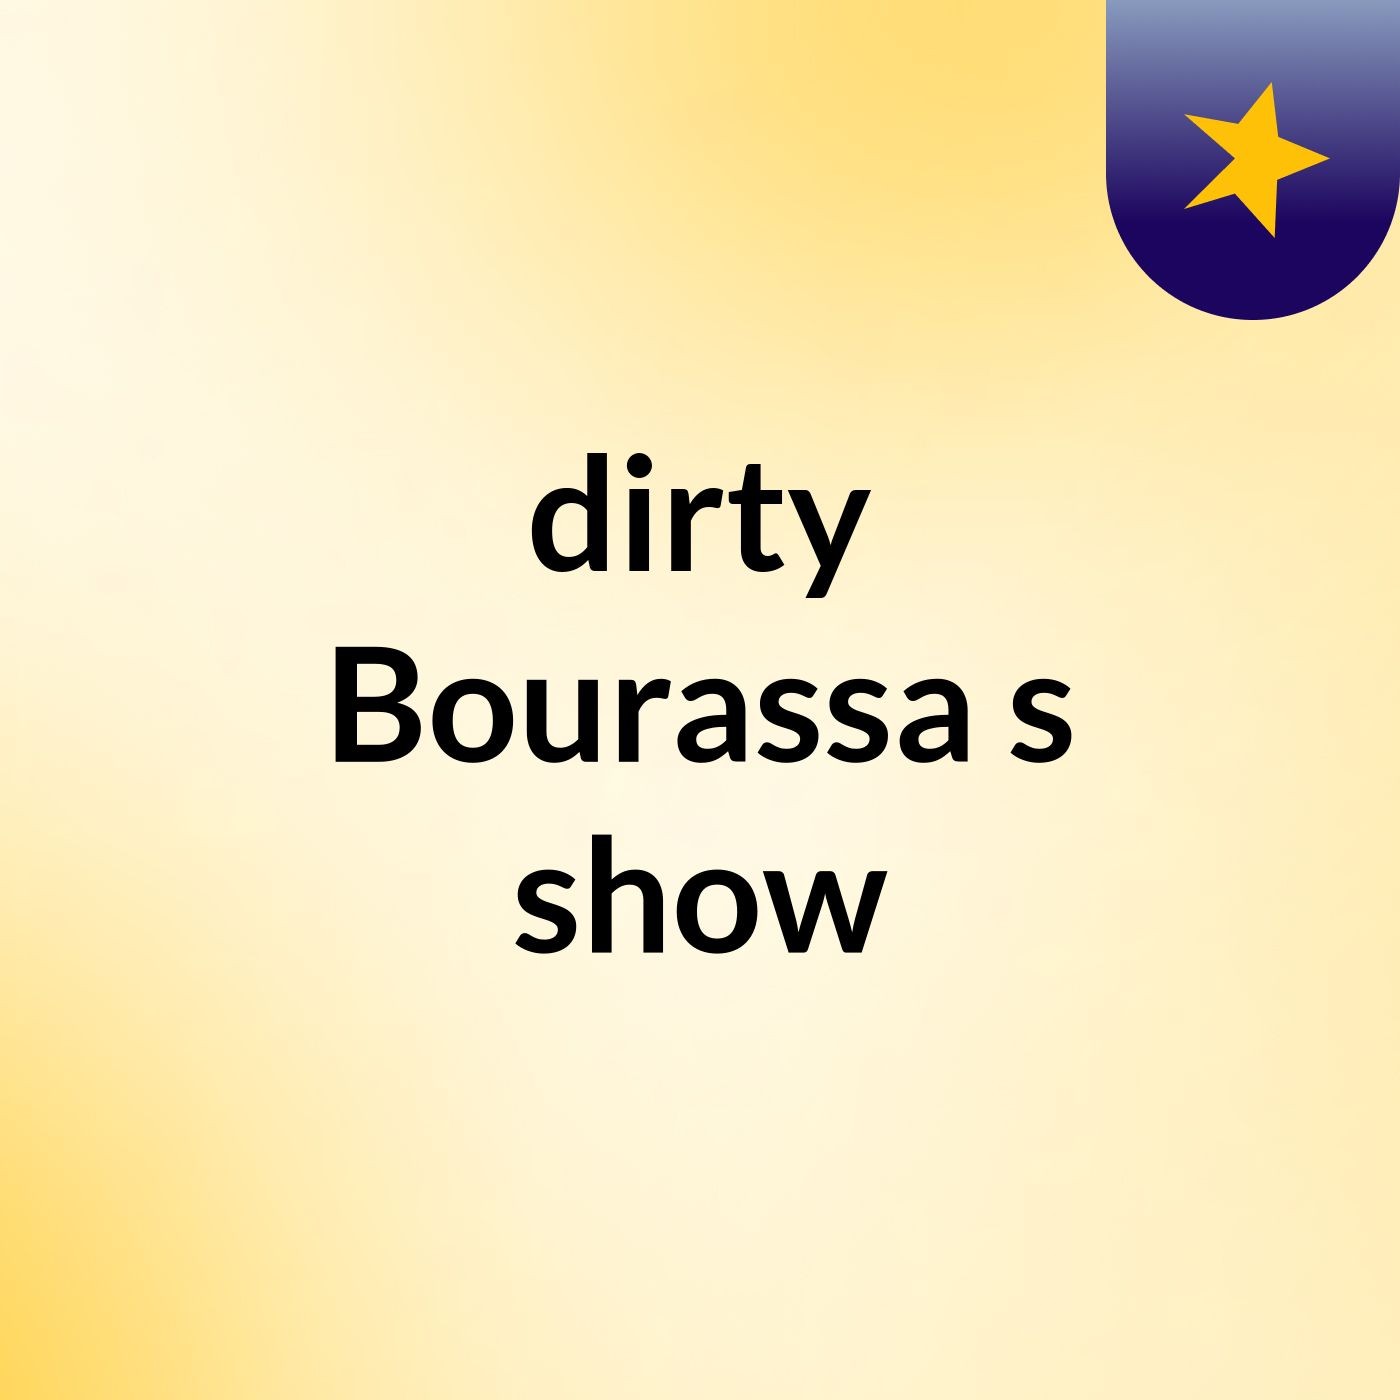 Episode 2 - dirty Bourassa's show